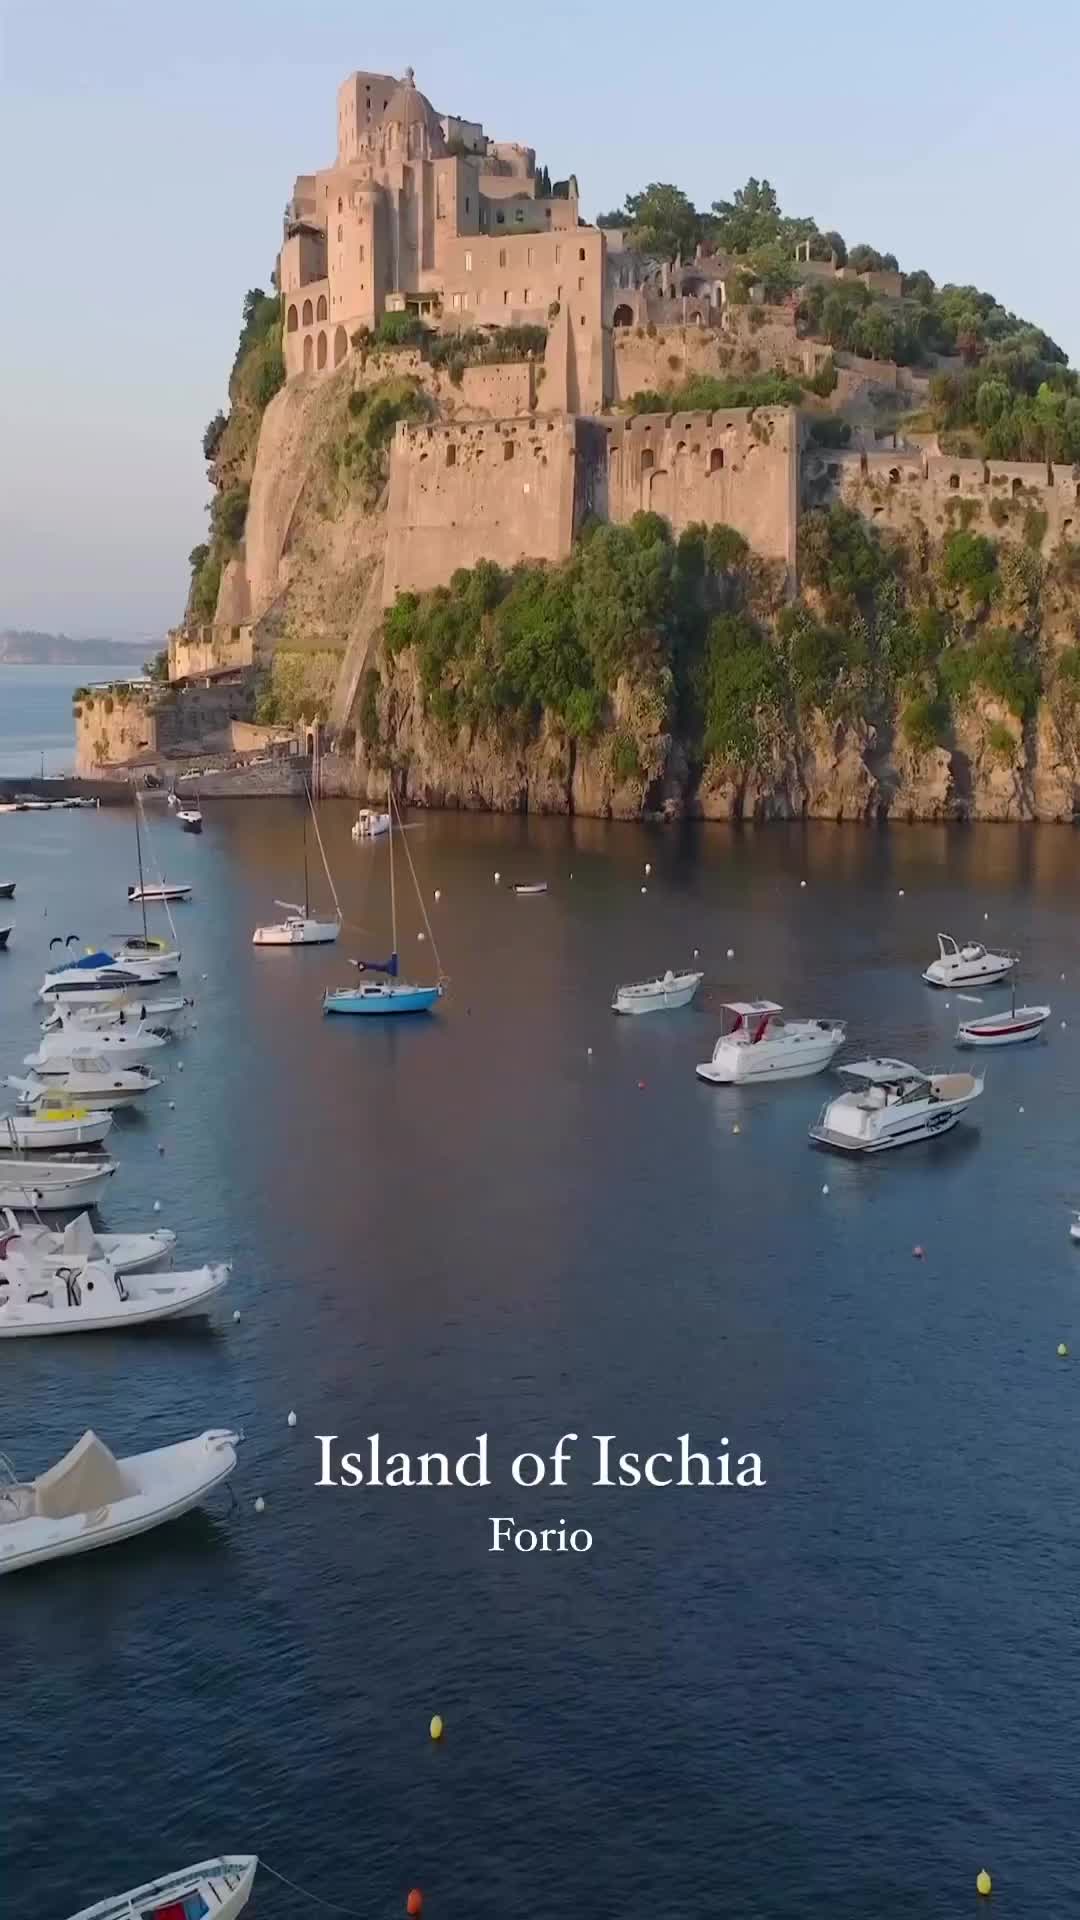 Island of Ischia 🇮🇹 Forio
#italia #italy #ischia